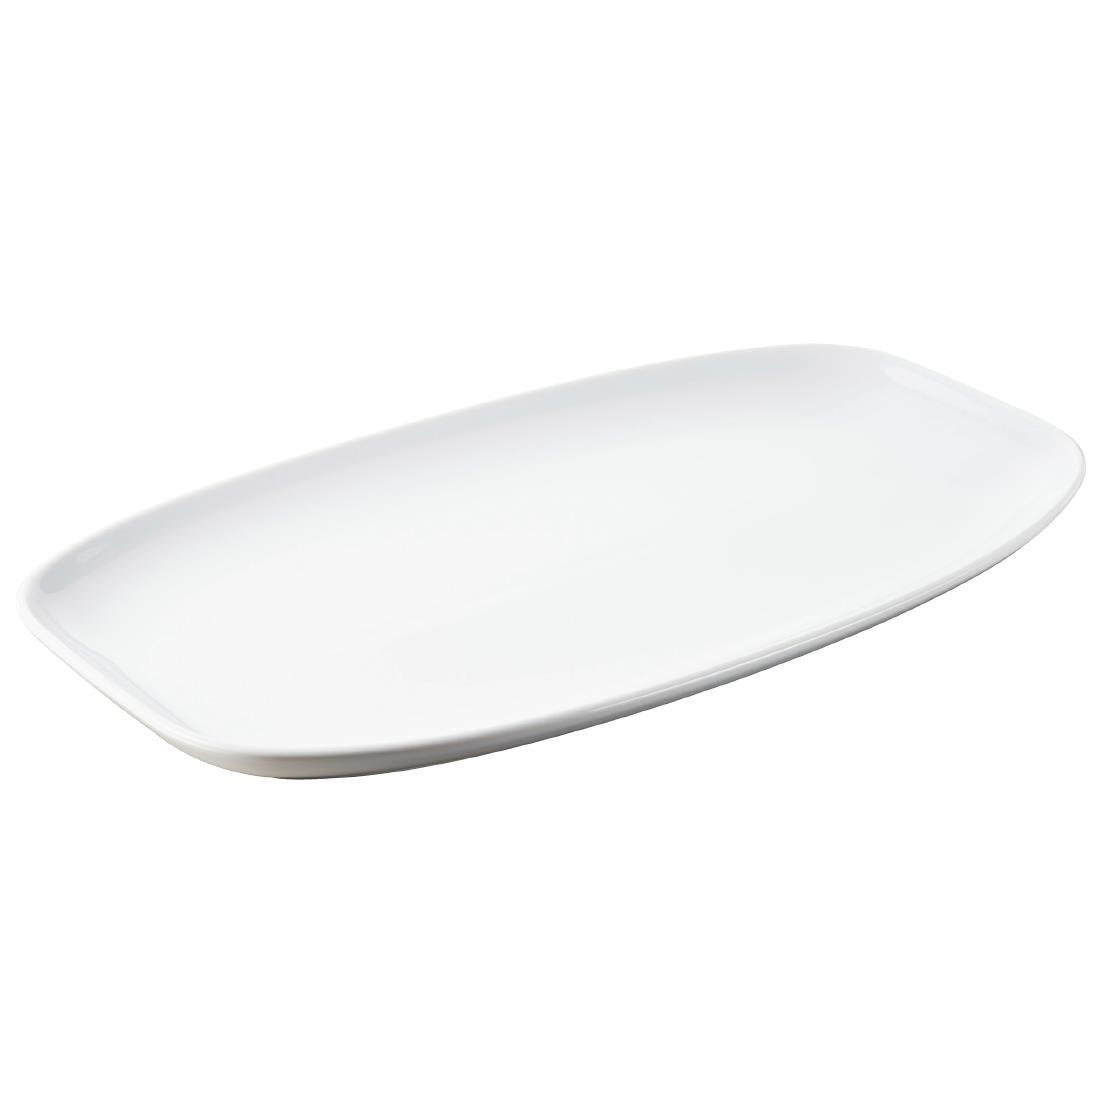 Revol Club Rectangular Plate White 360 x 210mm (Pack of 4) - GM506  - 1